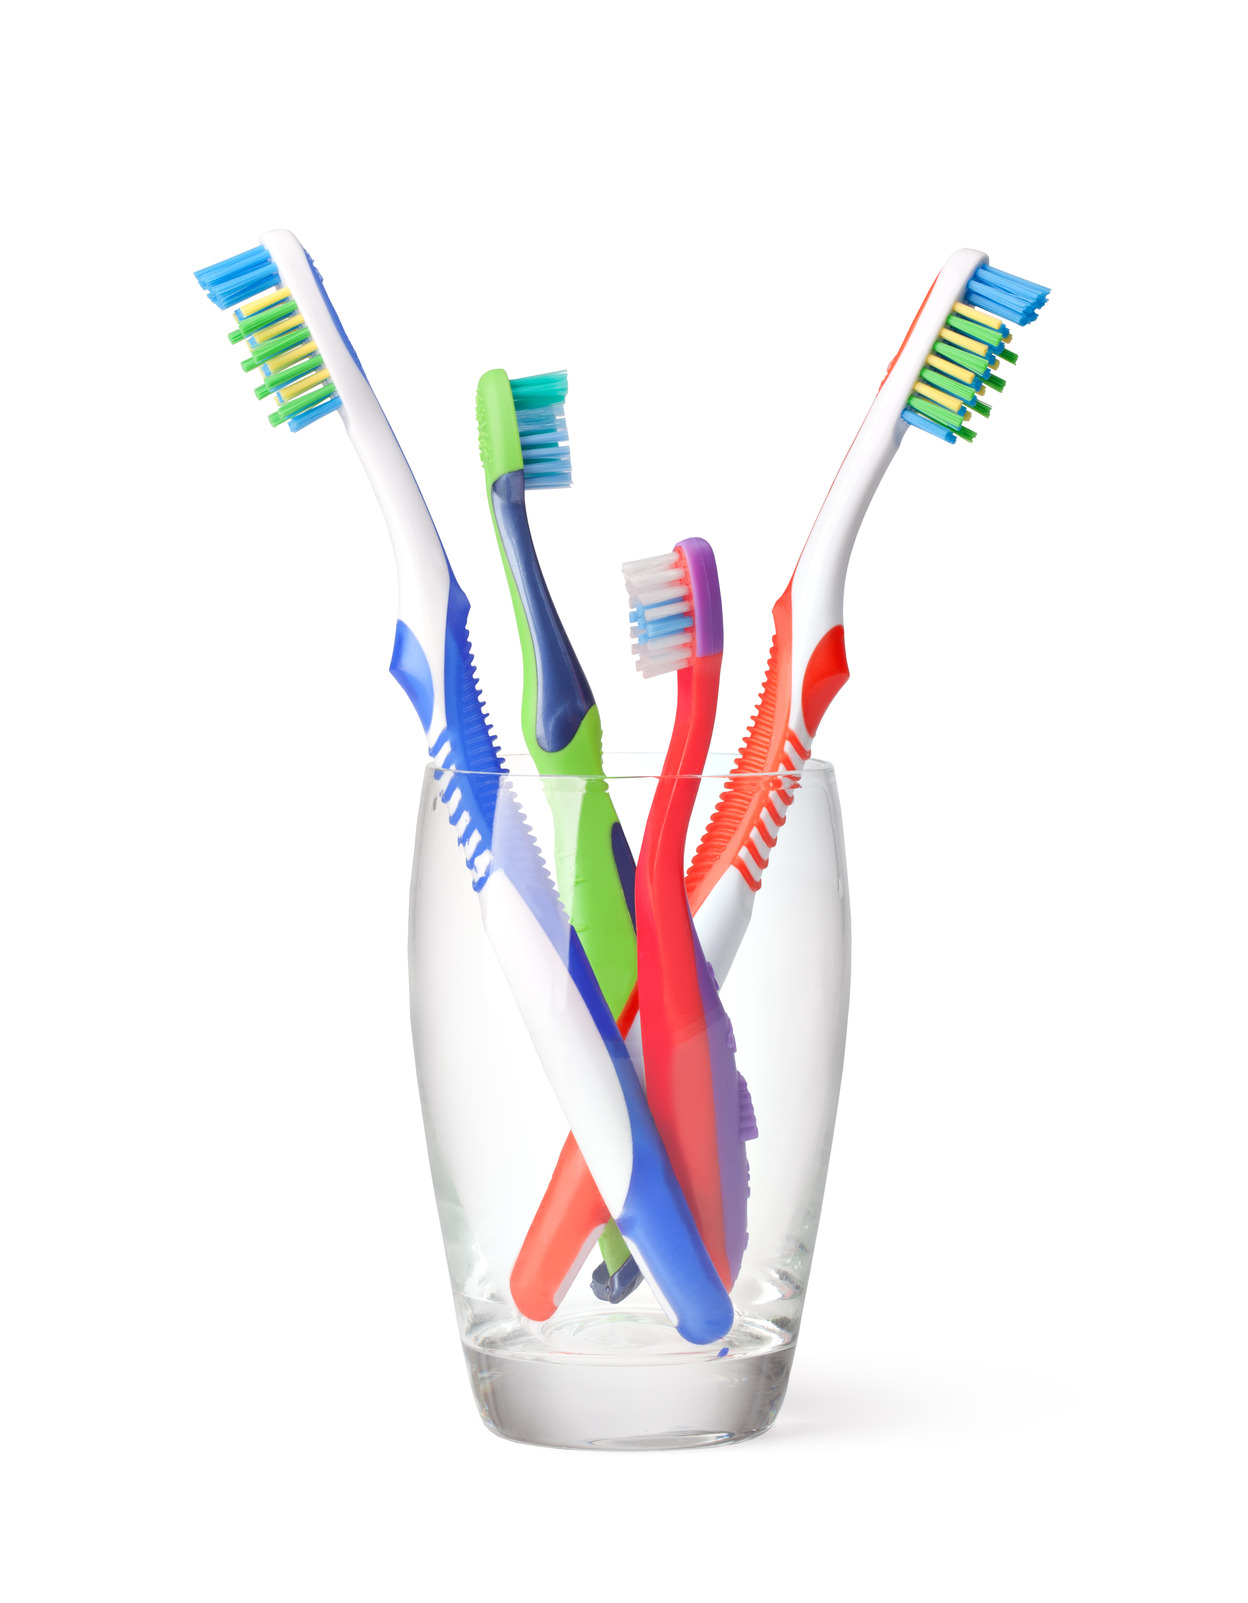 Toothbrushes, Toothbrushes, Toothbrushes - Dentist in Mansfield TX ...